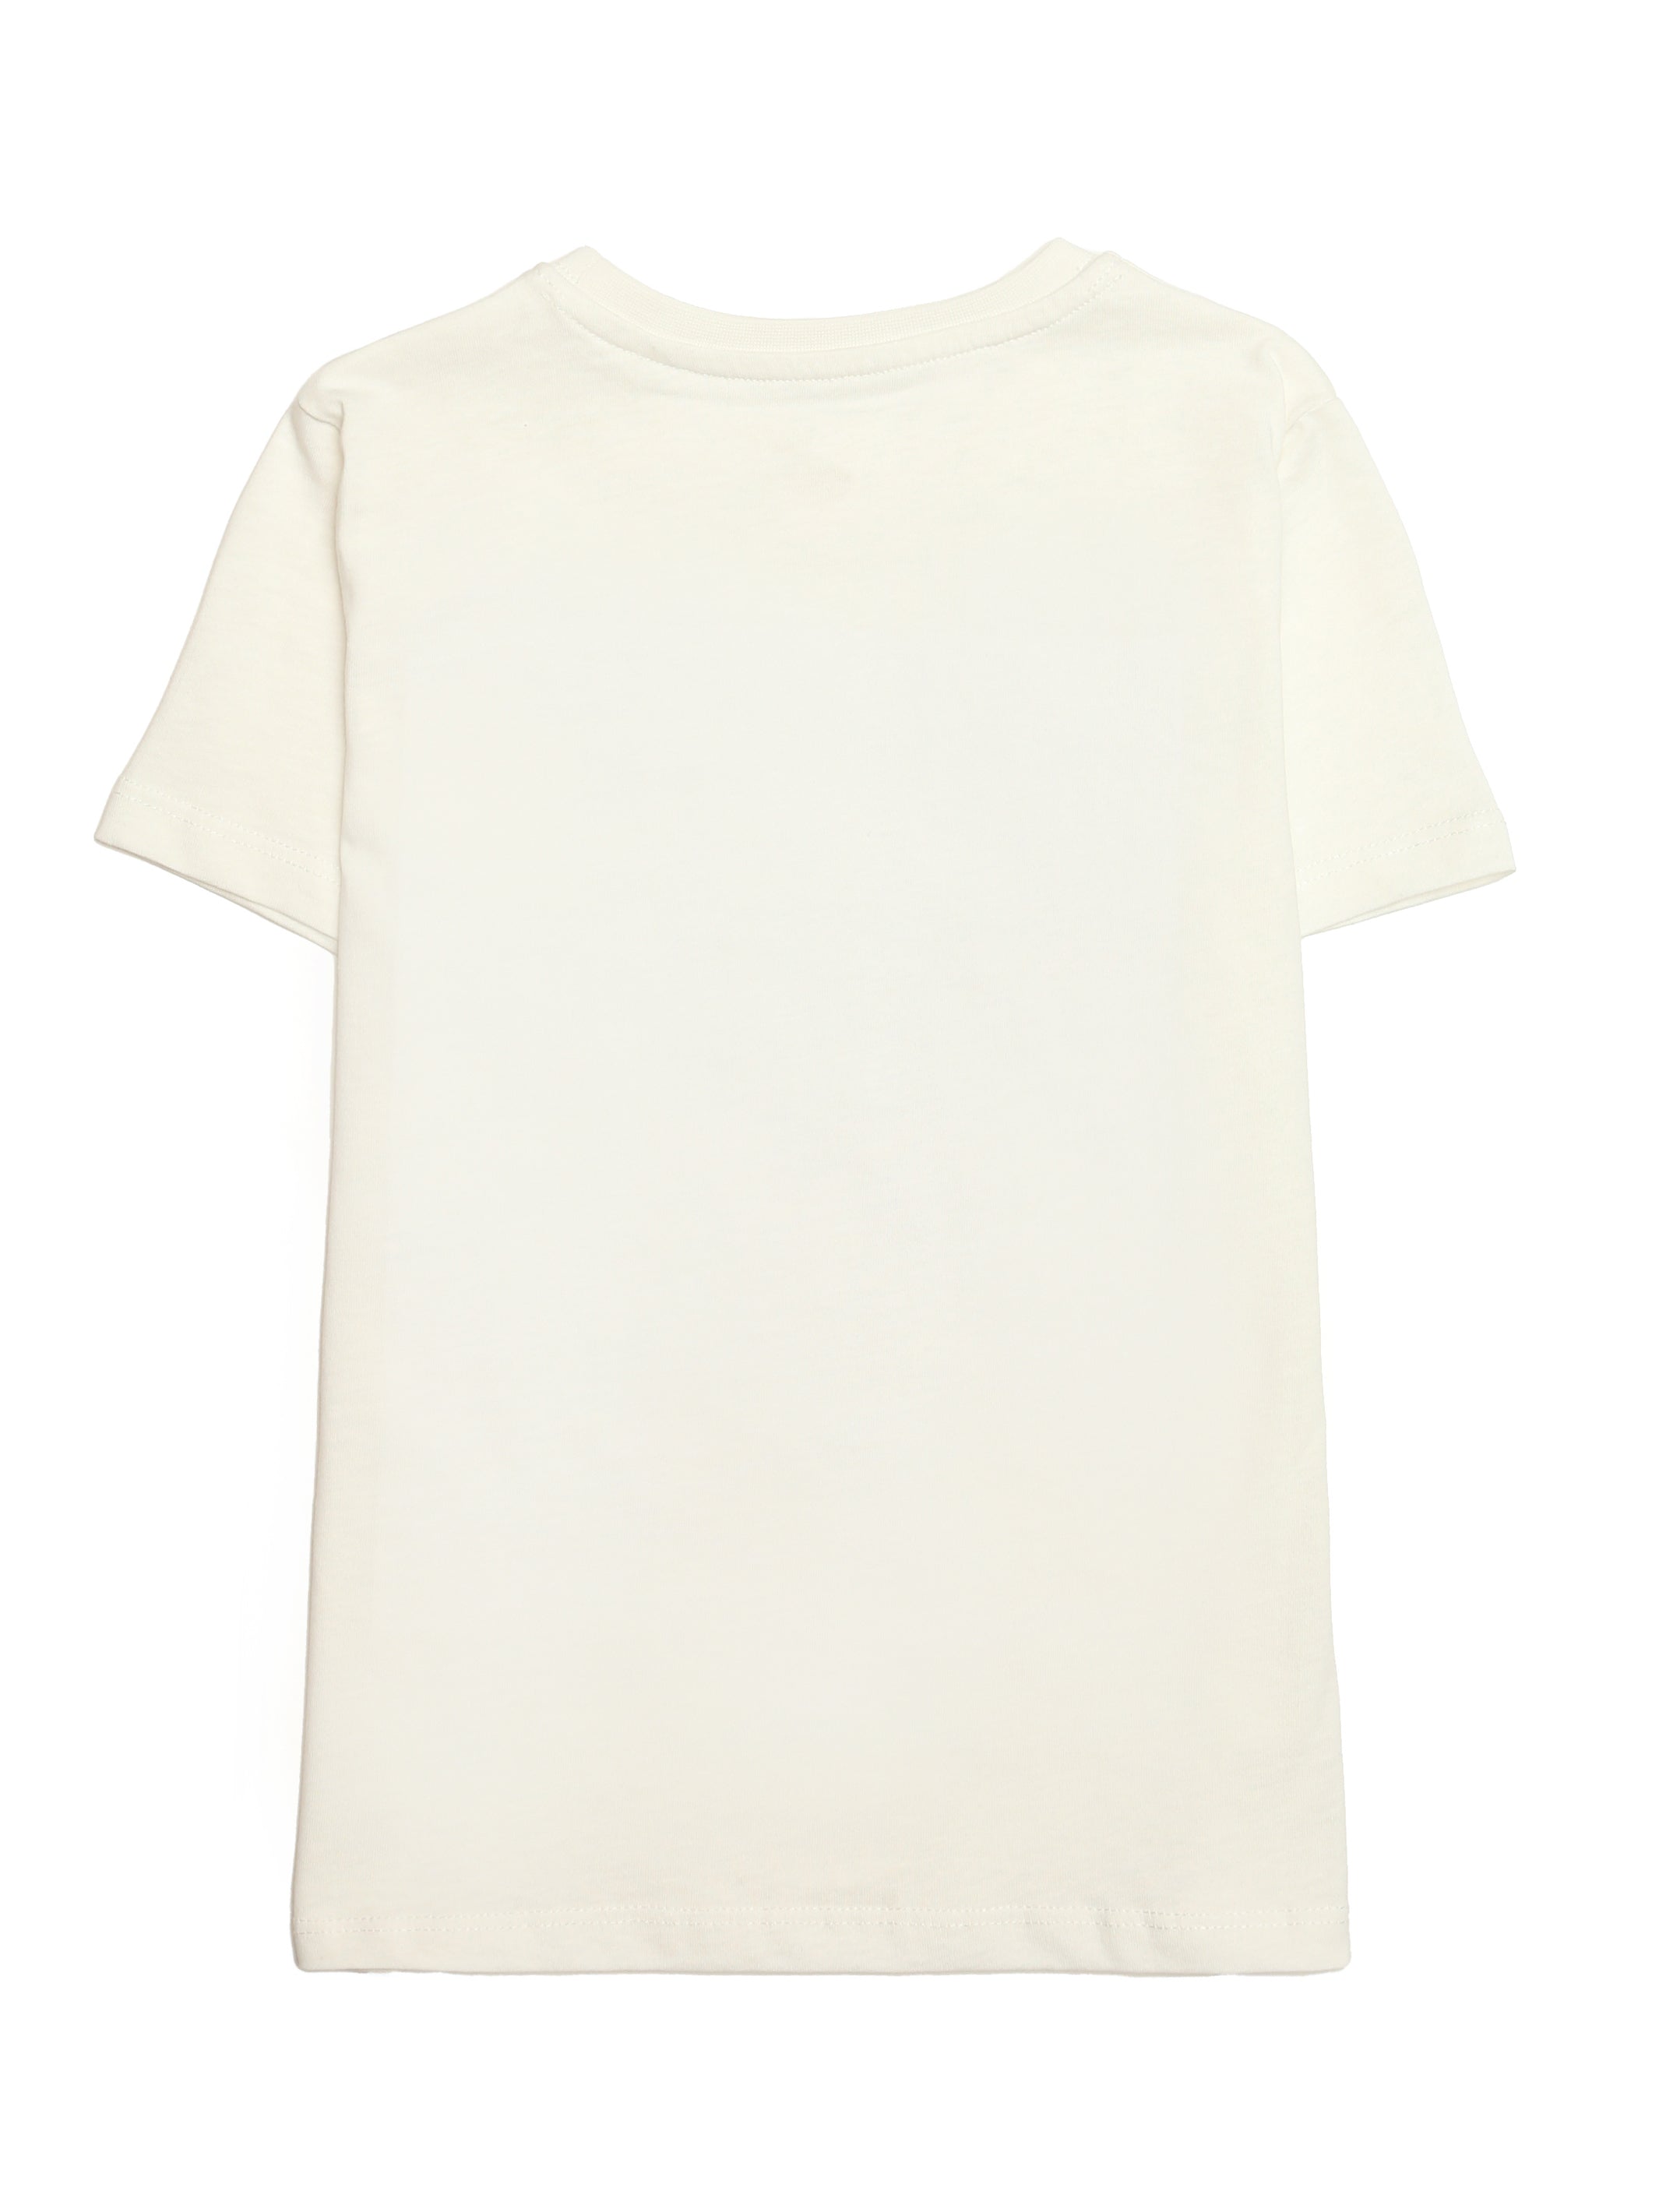 Boy's Brooklyn Rep T-shirt in Antique White - BROOKLYN INDUSTRIES